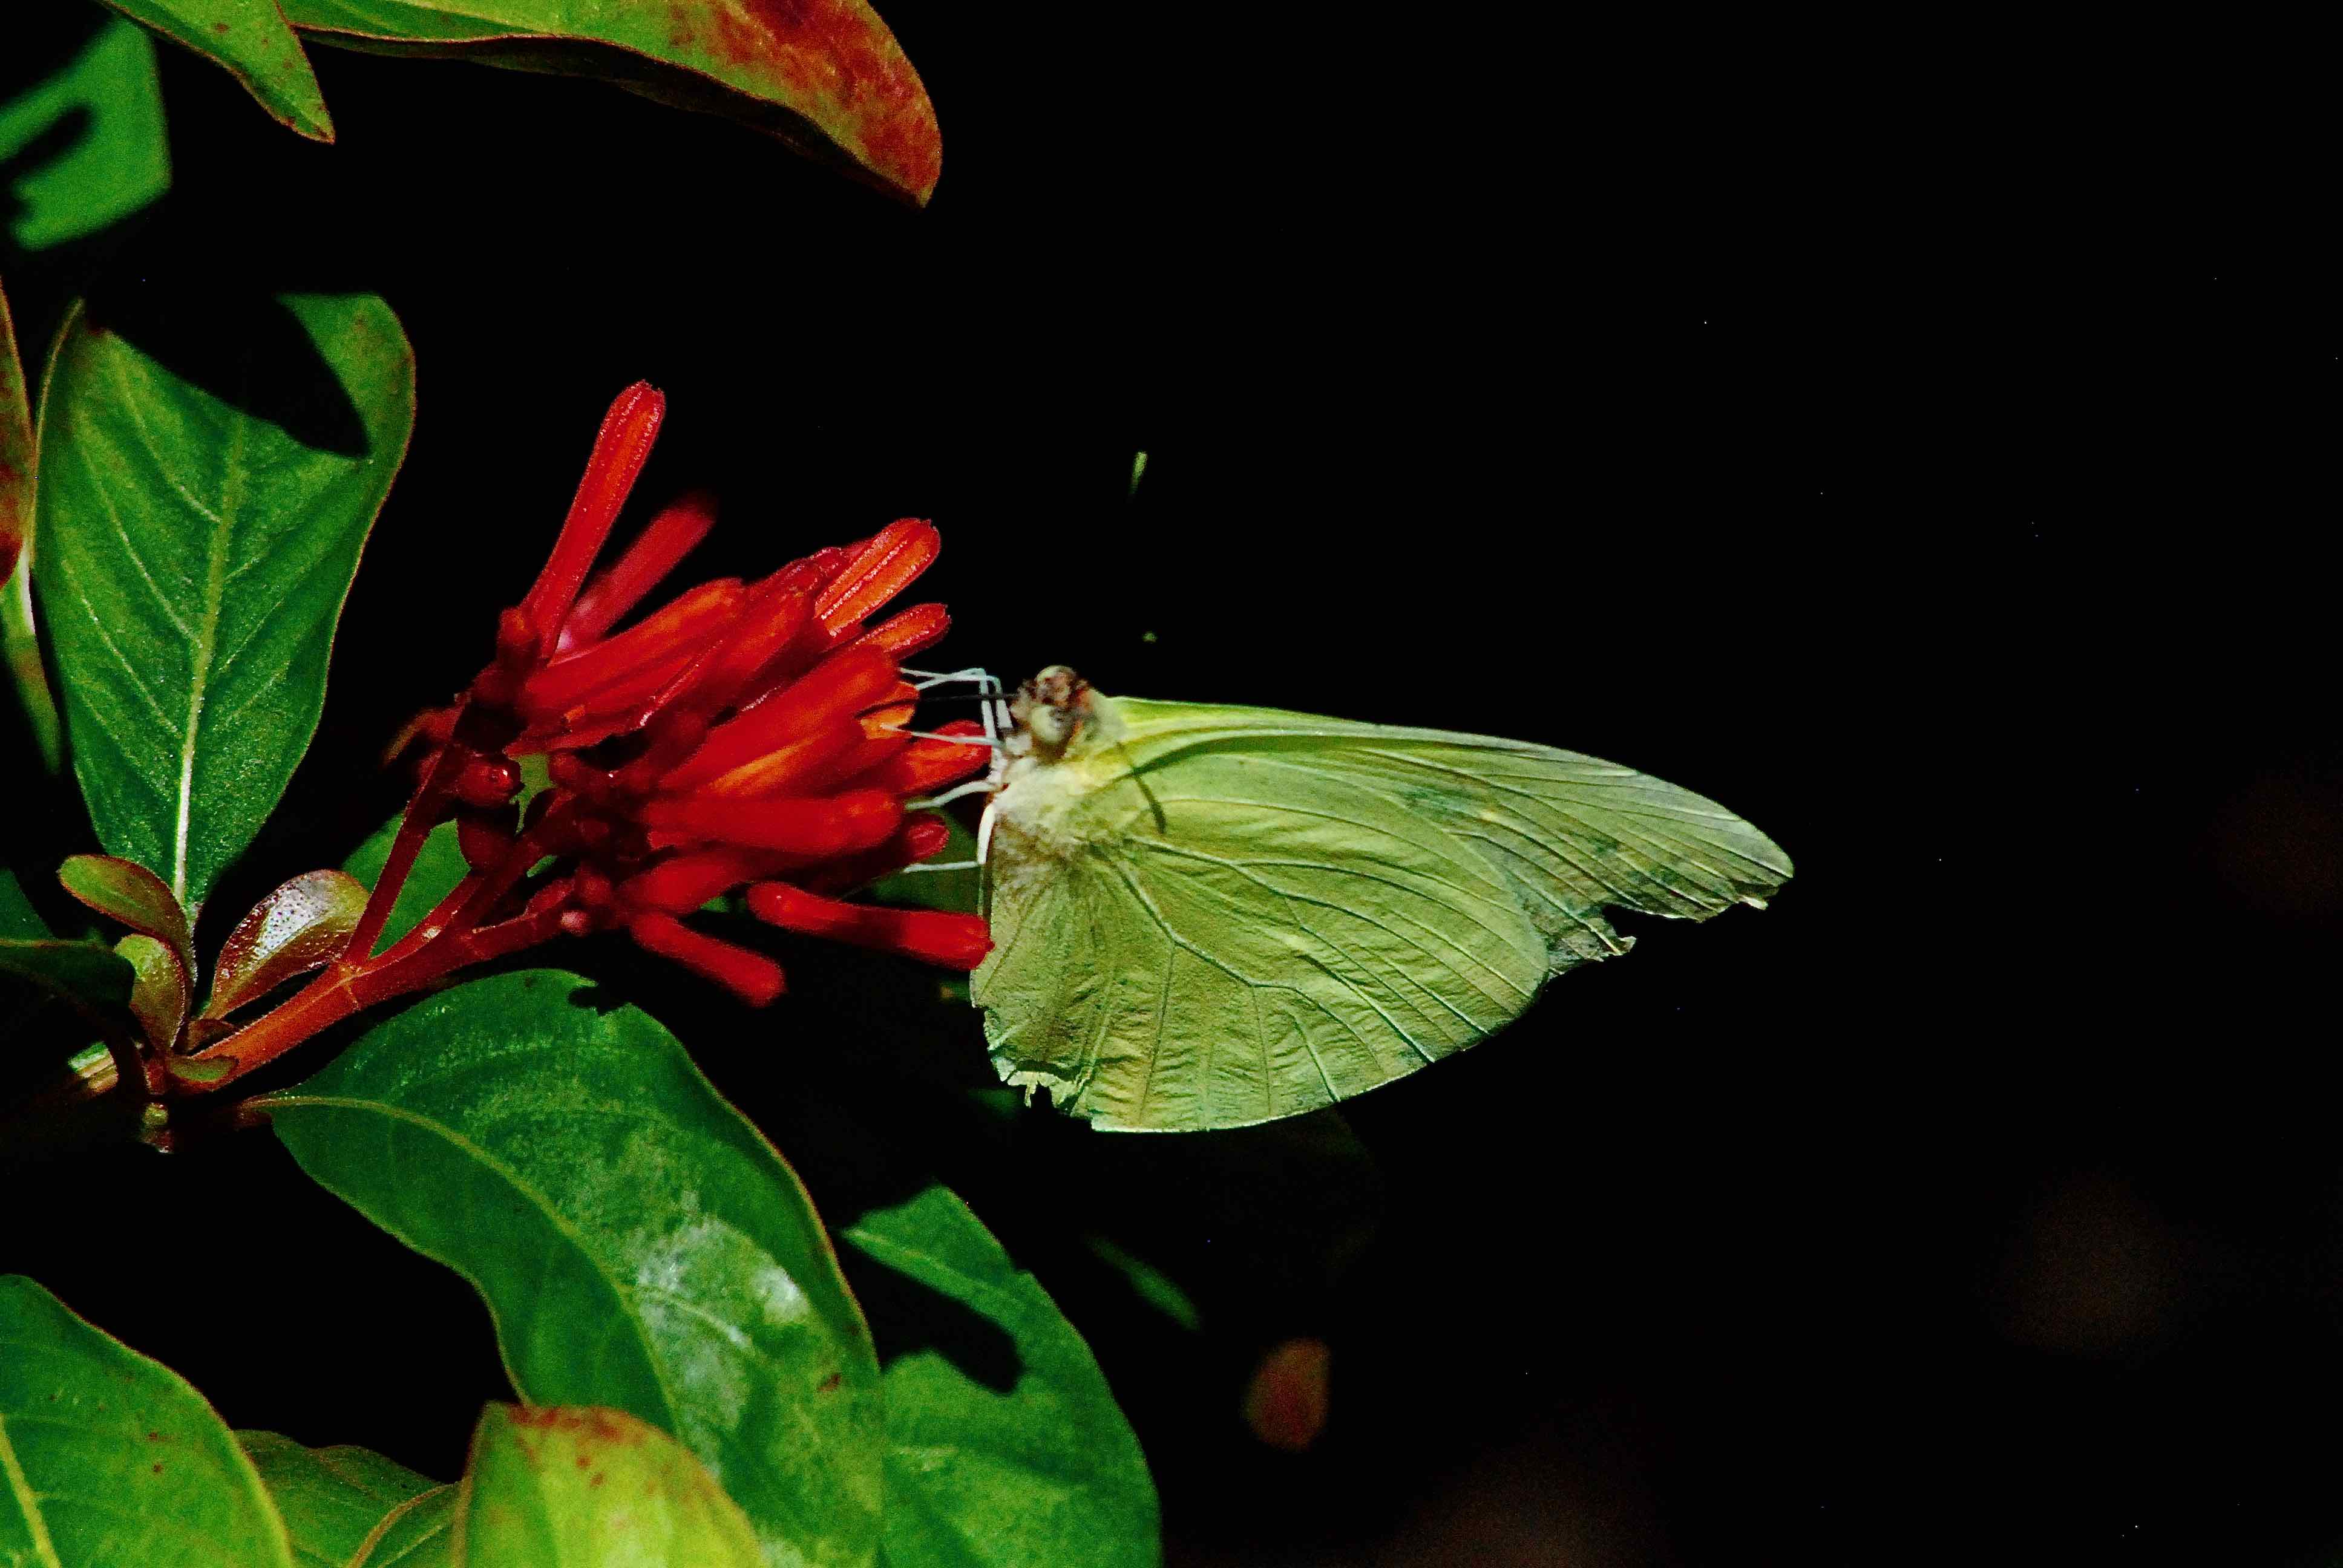 Statira Sulphur Butterfly